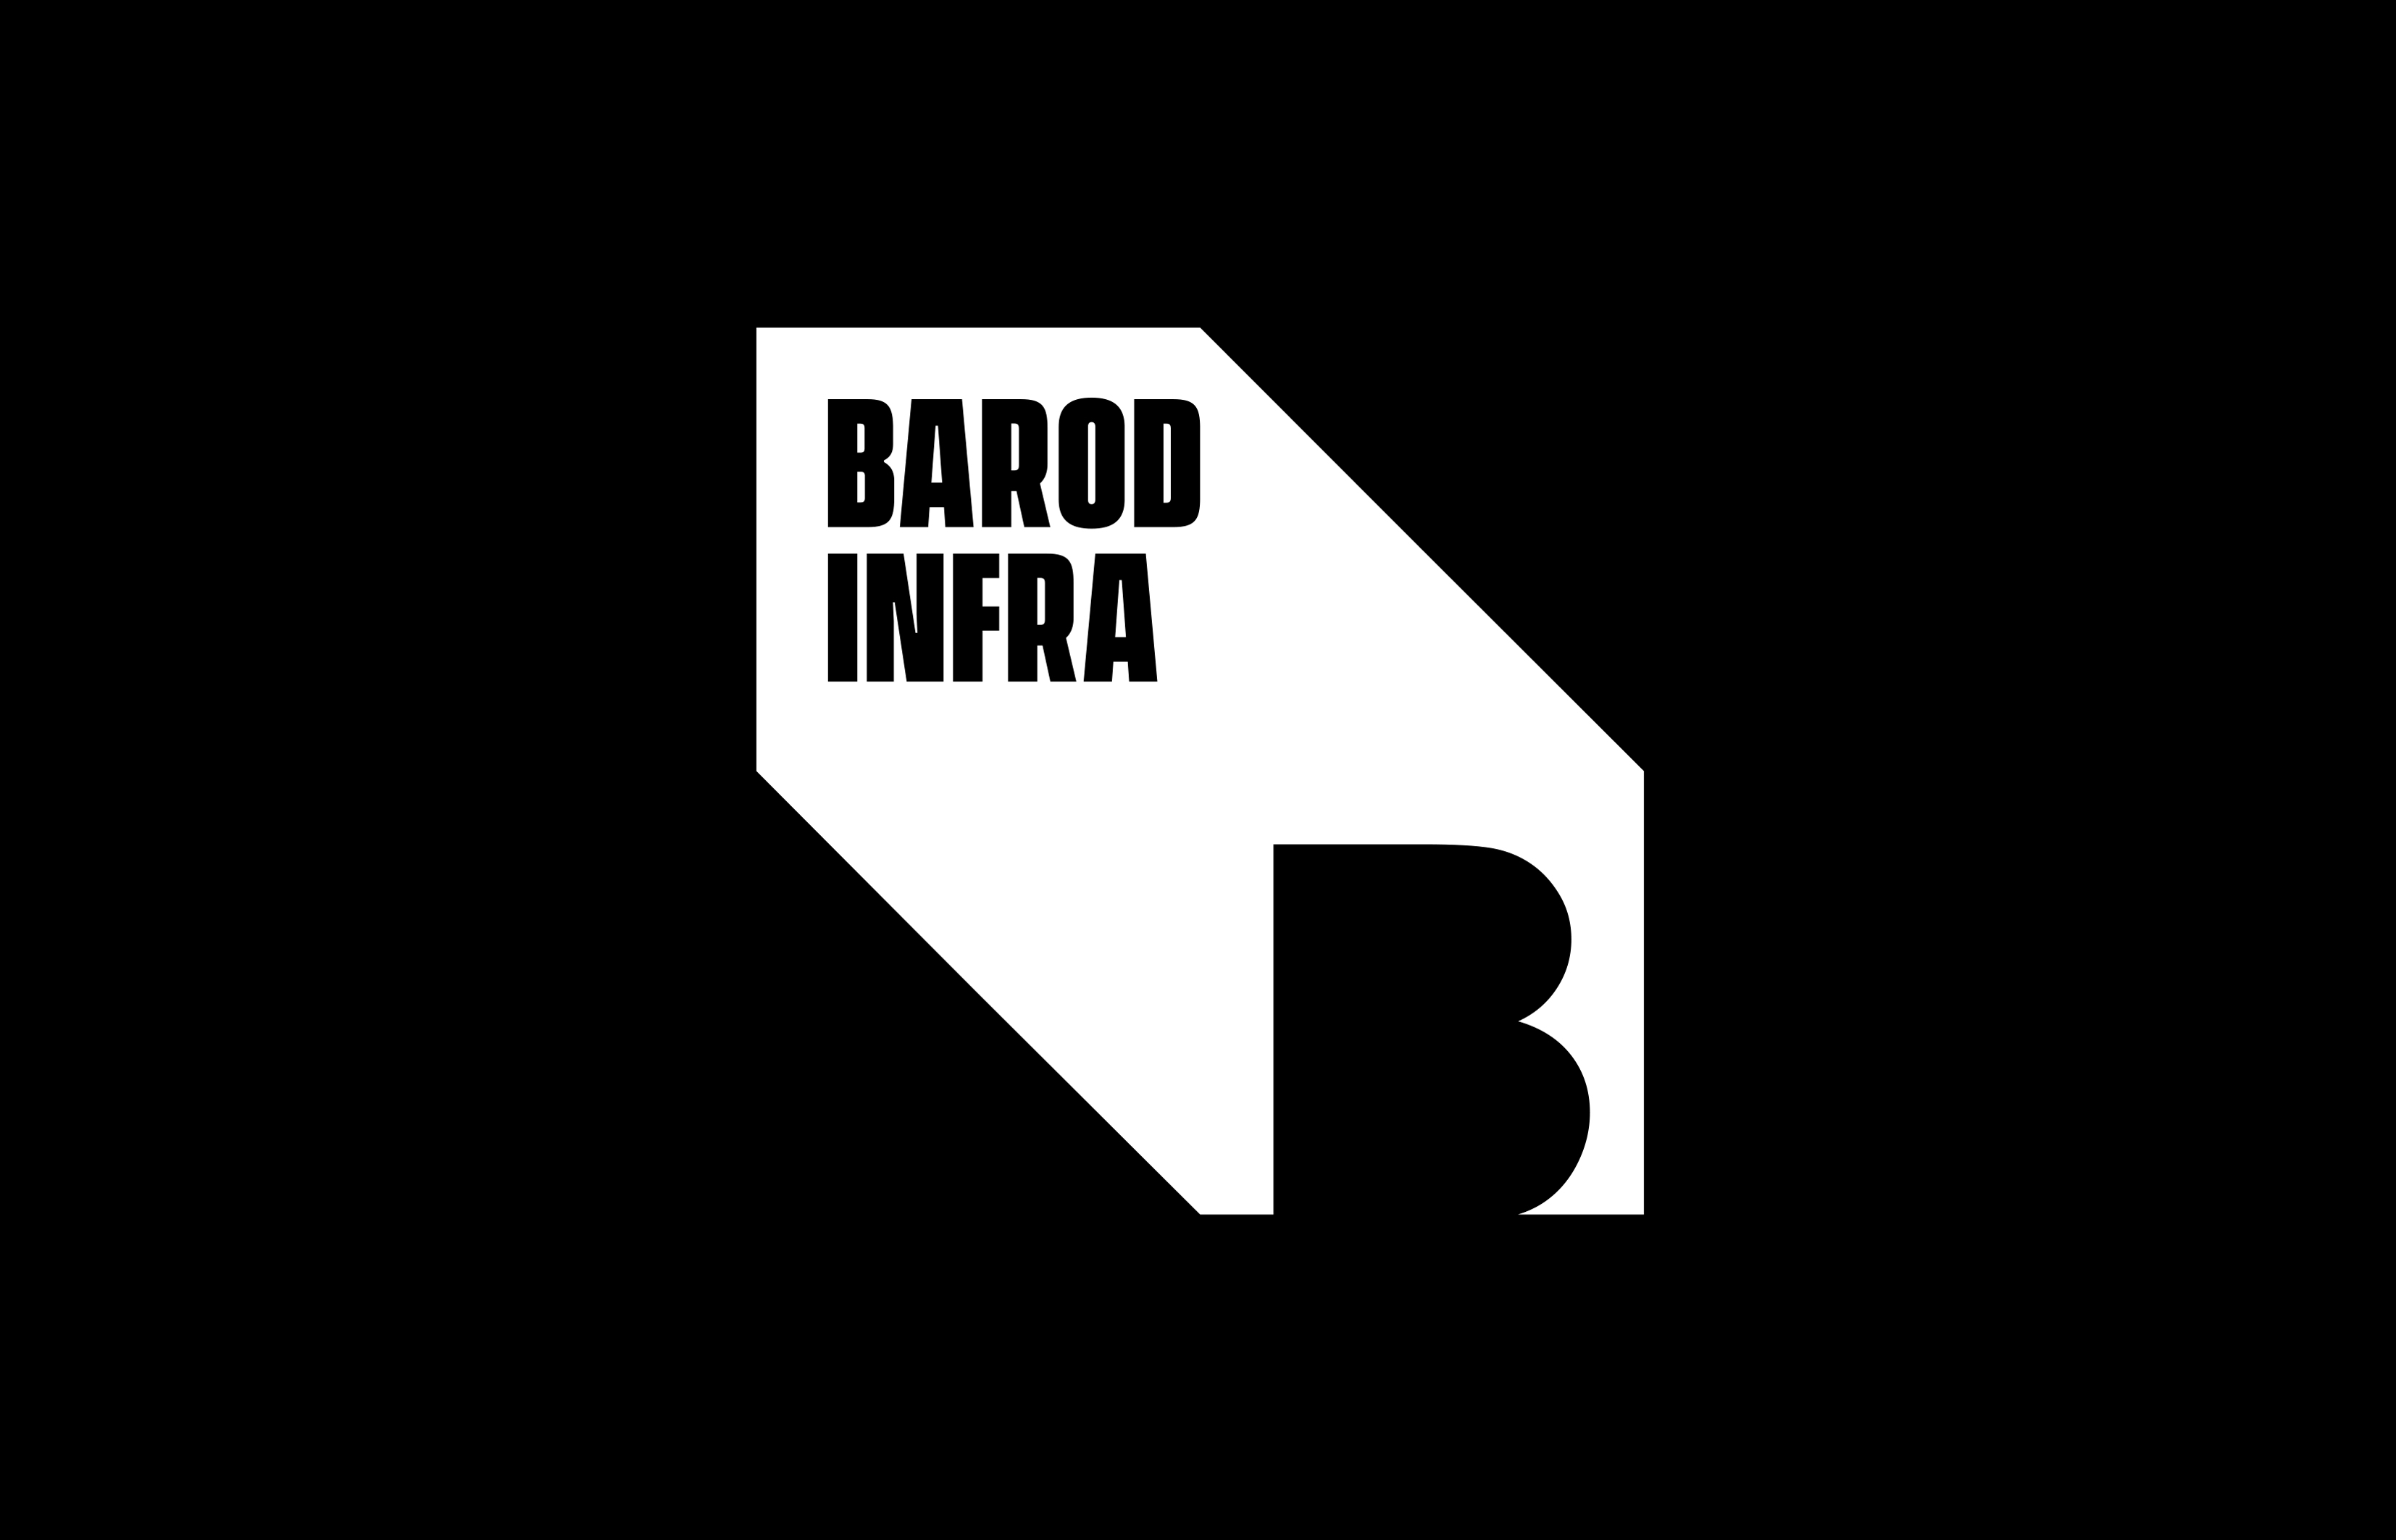 Barod Infra Visual and Brand Identity